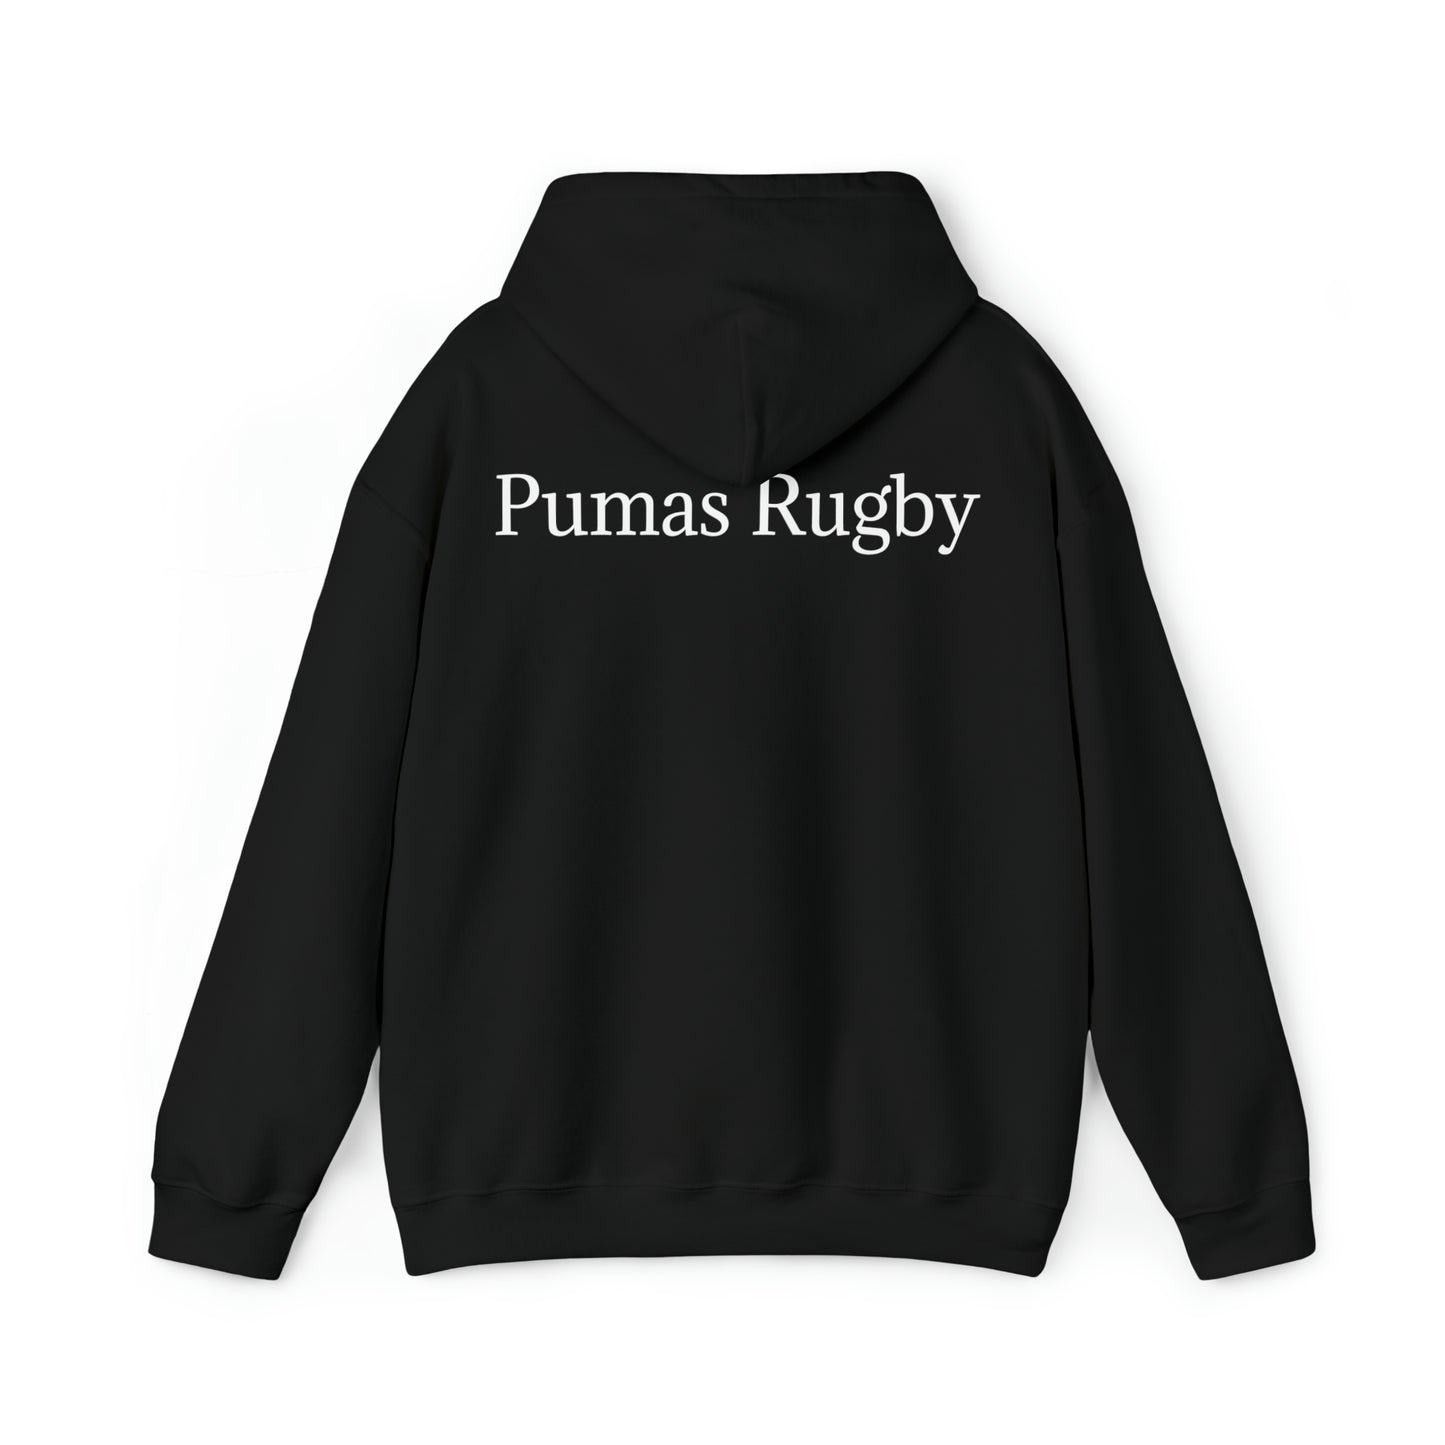 Ready Pumas - black hoodie